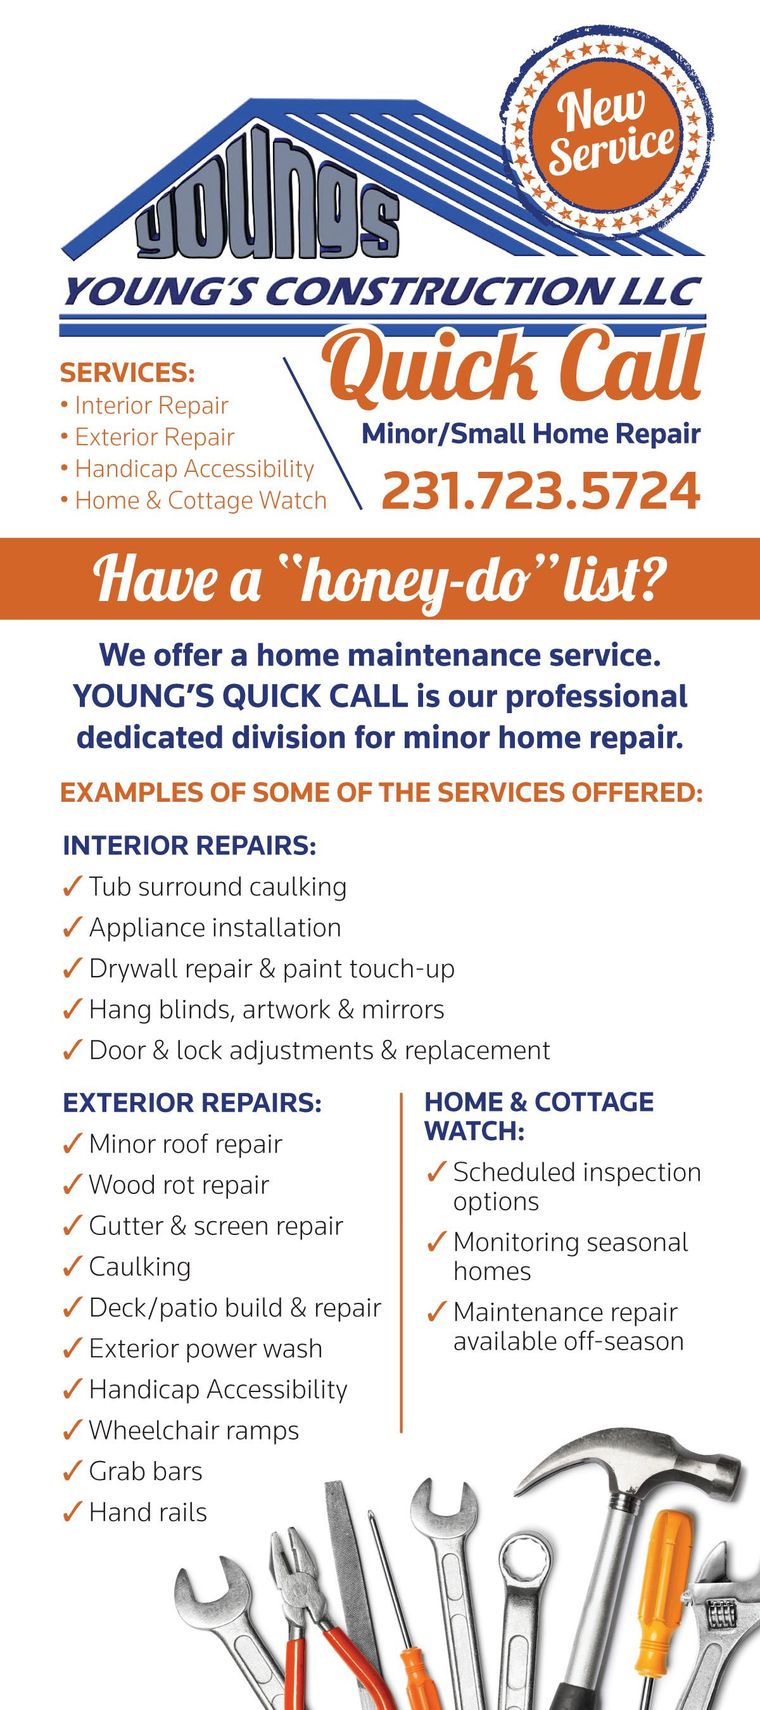 minor home repairs, small home repairs, interior repair, exterior repair, home watch, cottage watch